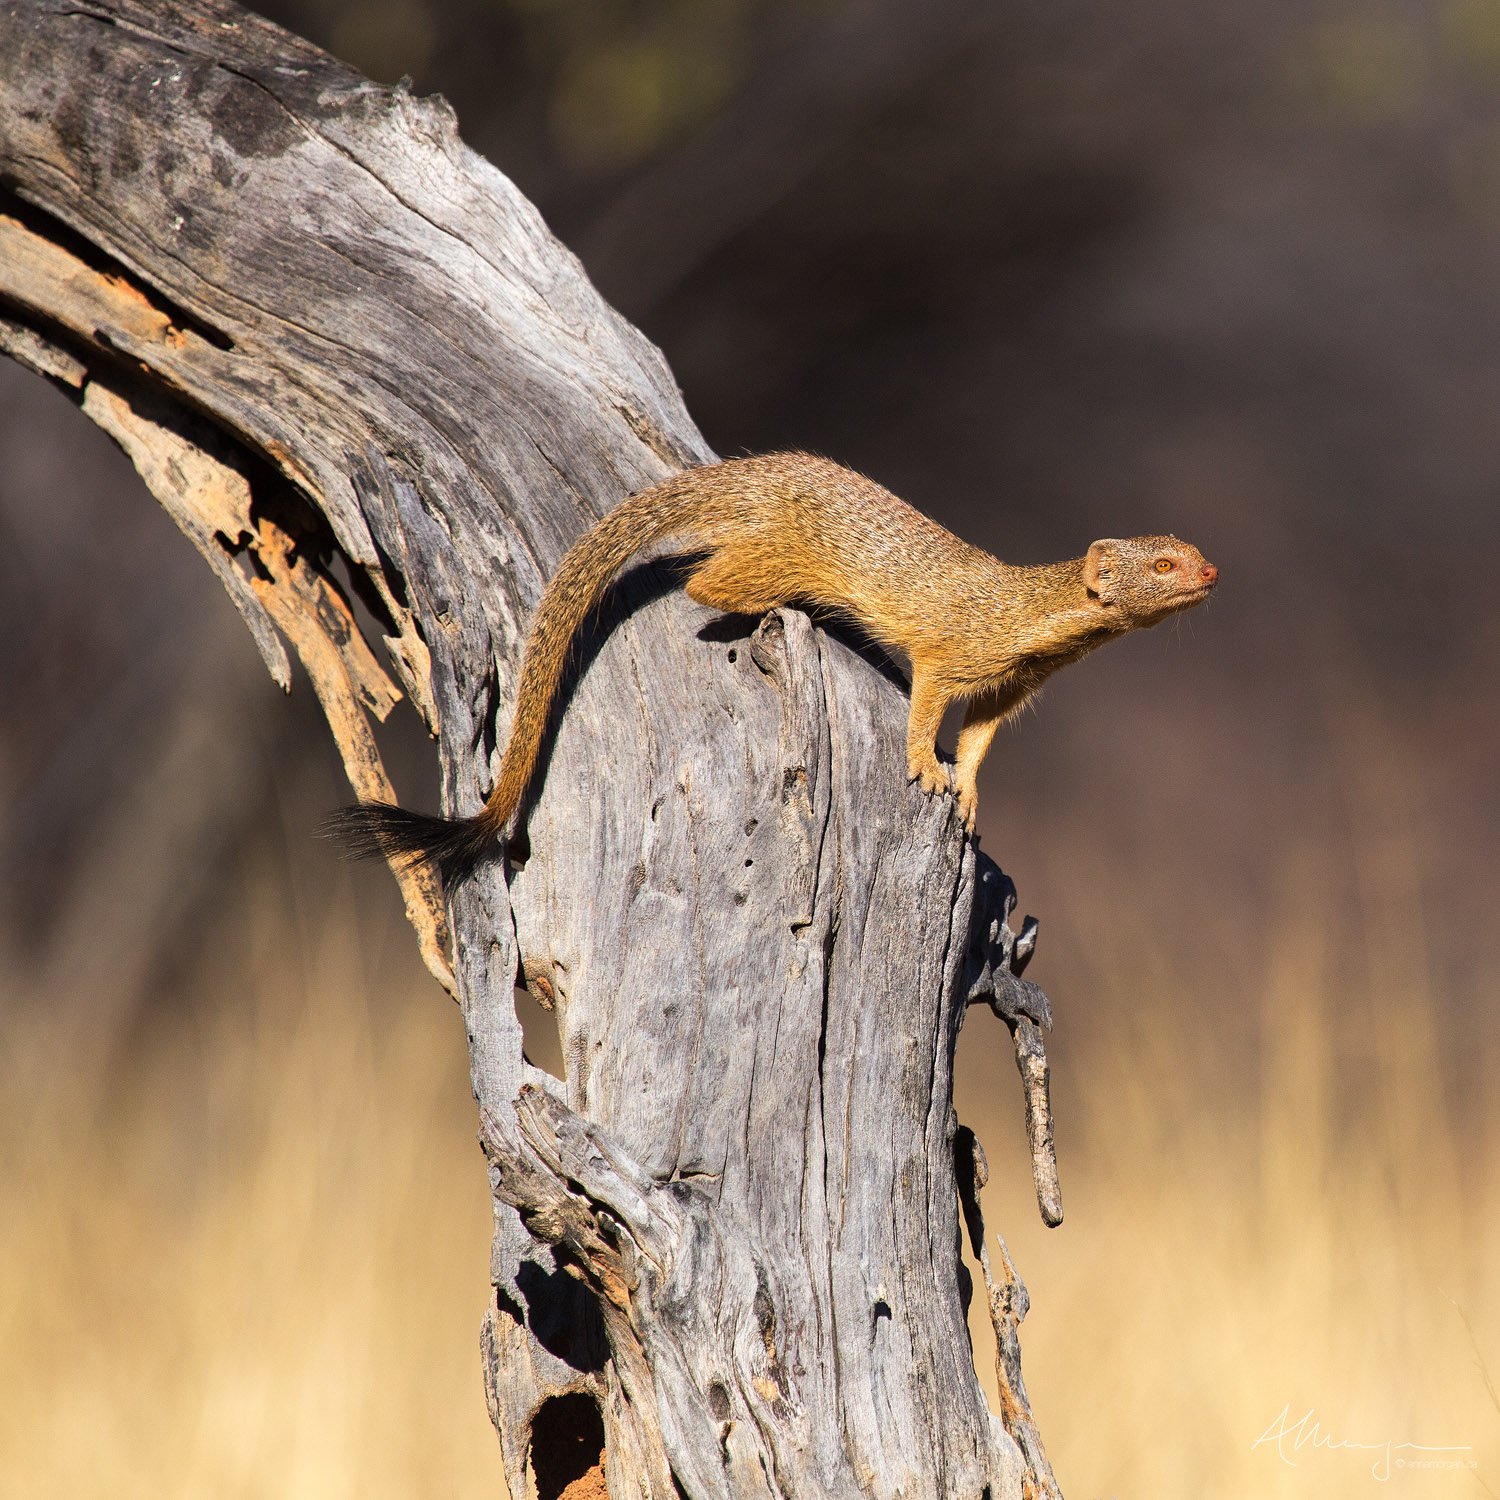 A slender Mongoose perches on an Acacia tree in the Kalahari desert of Namibia.